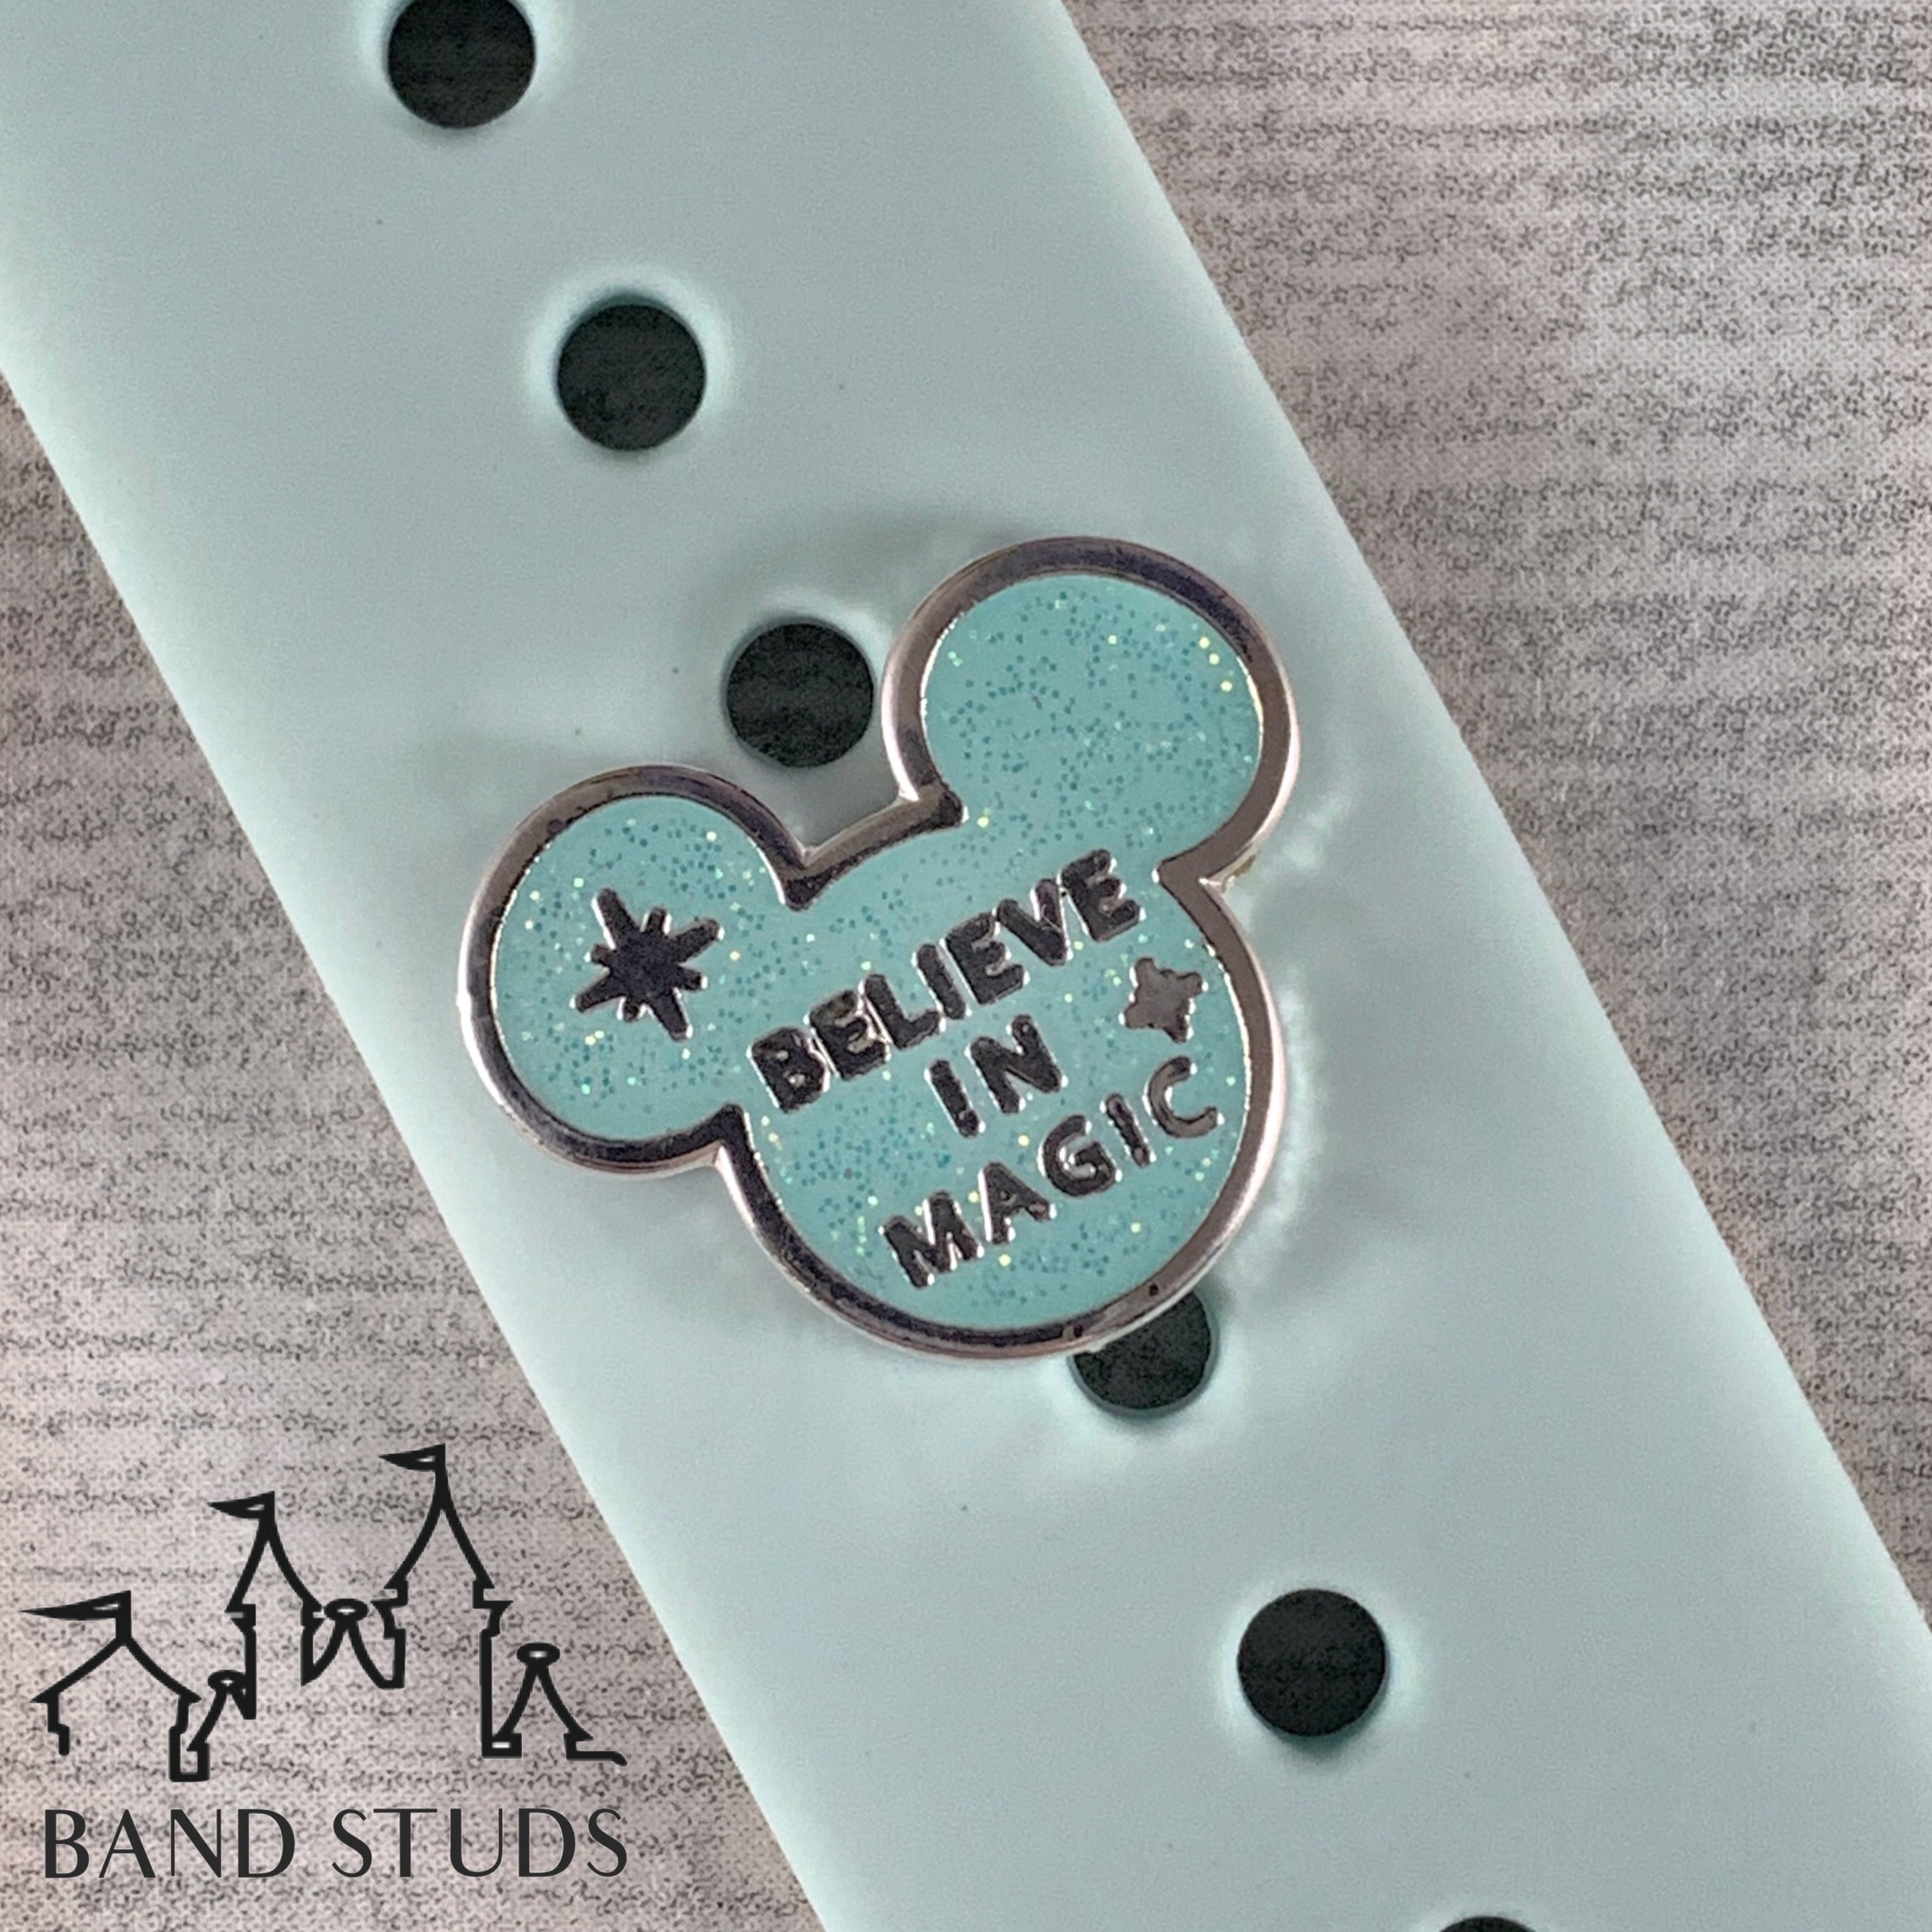 Band Stud® - Believe in Magic